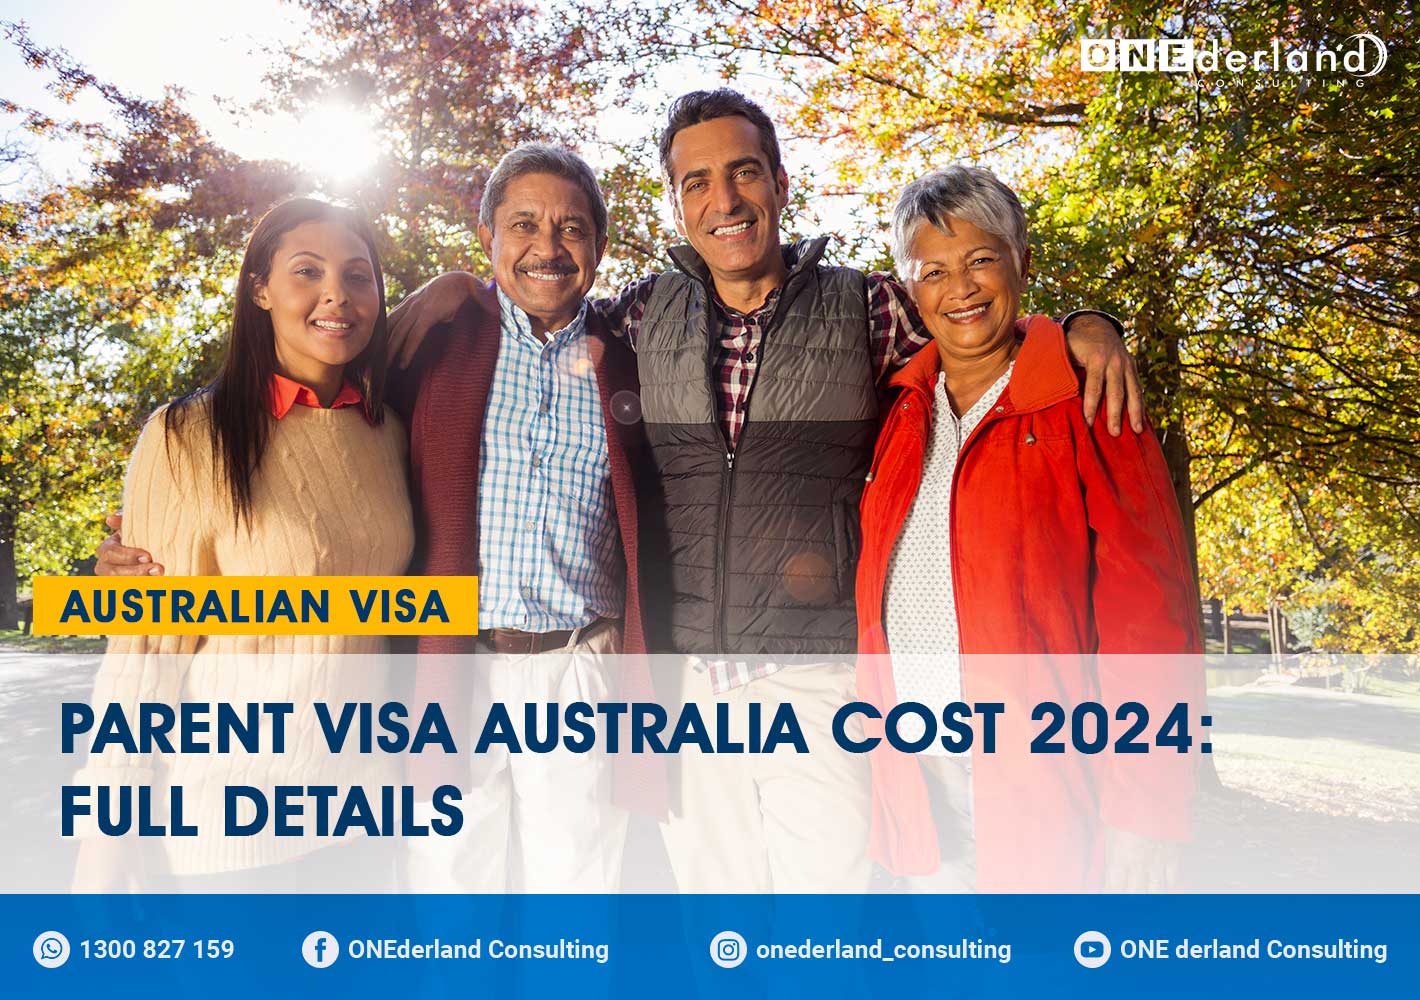 Full Details on Parent Visa Australia Cost in 2024